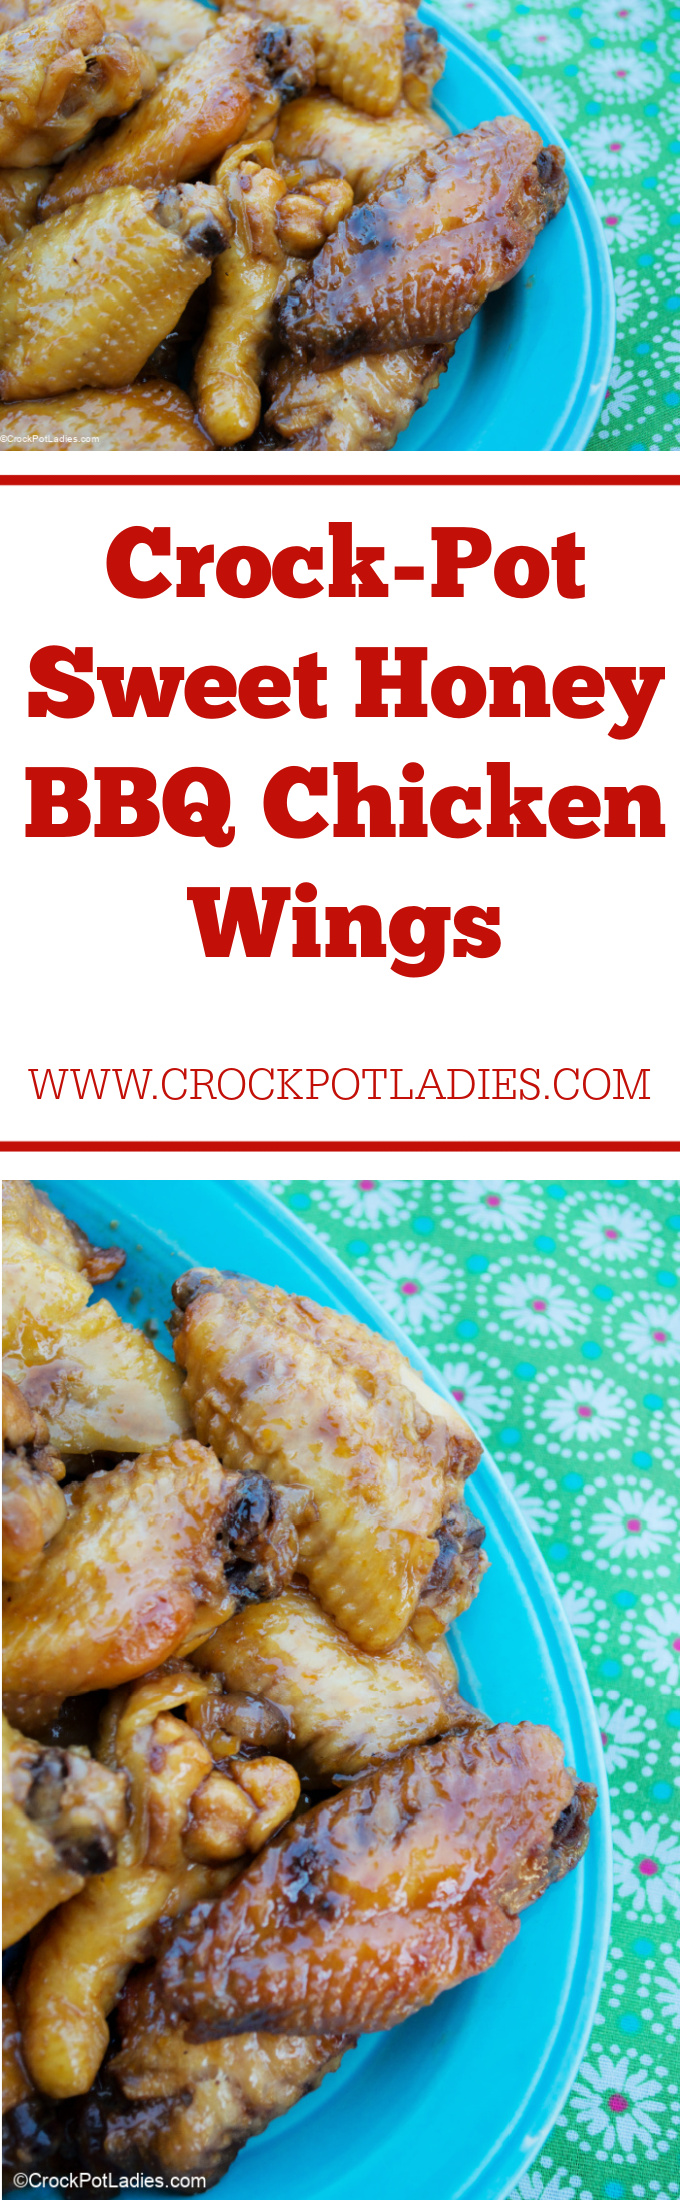 Crock-Pot Sweet Honey BBQ Chicken Wings